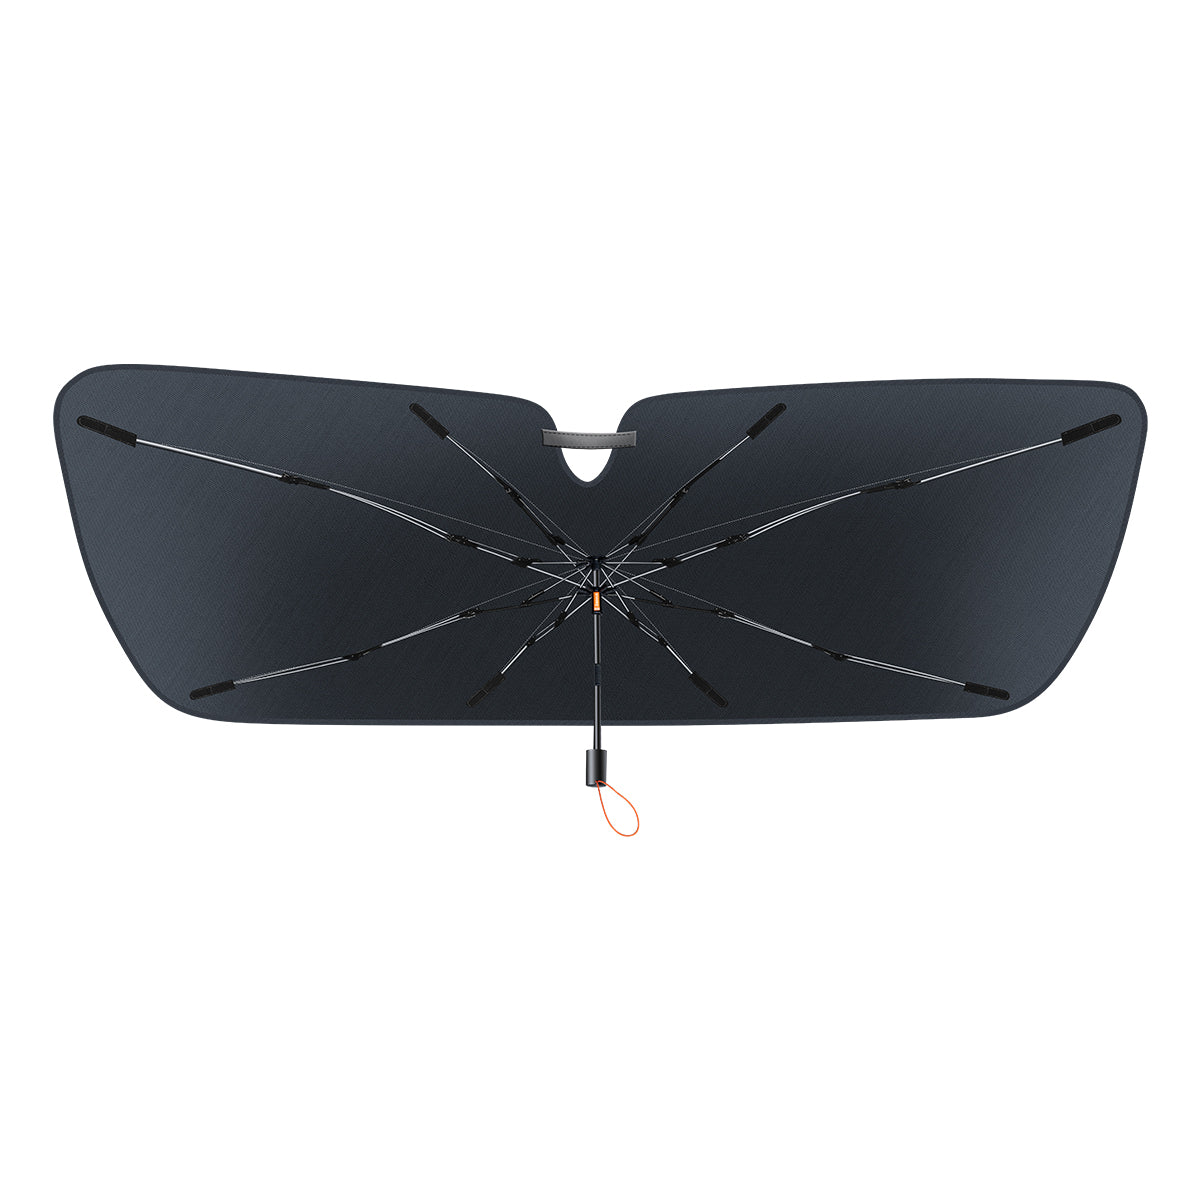 Baseus CoolRide Windshield Car Umbrella Sunshade(1 Year Warranty)